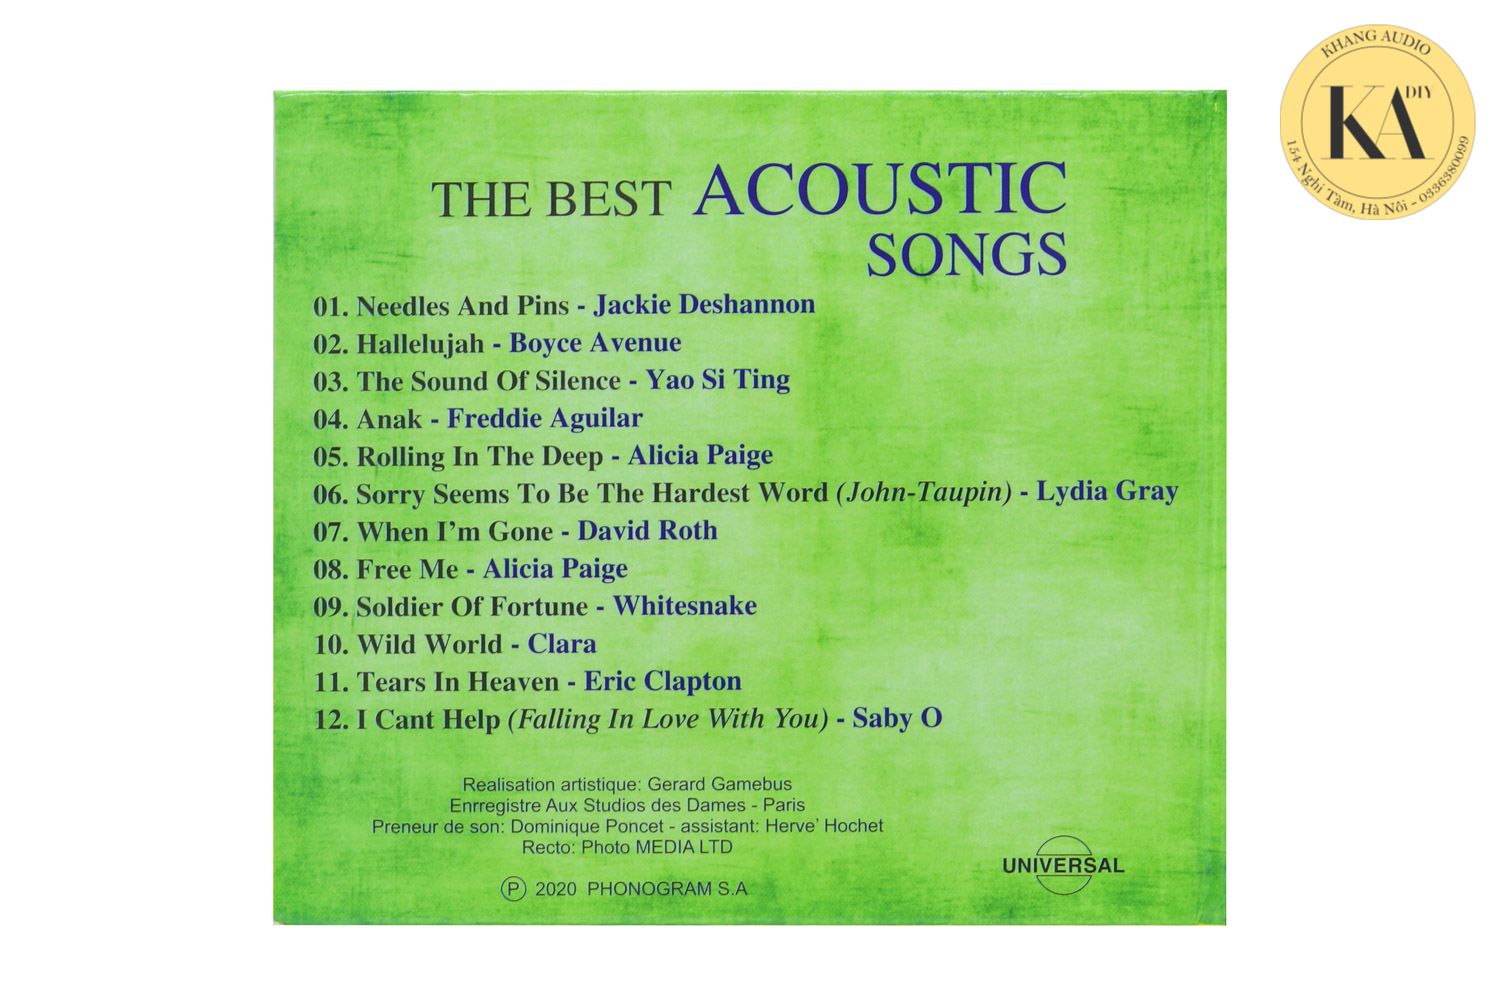 Master Acoustic Vol.1